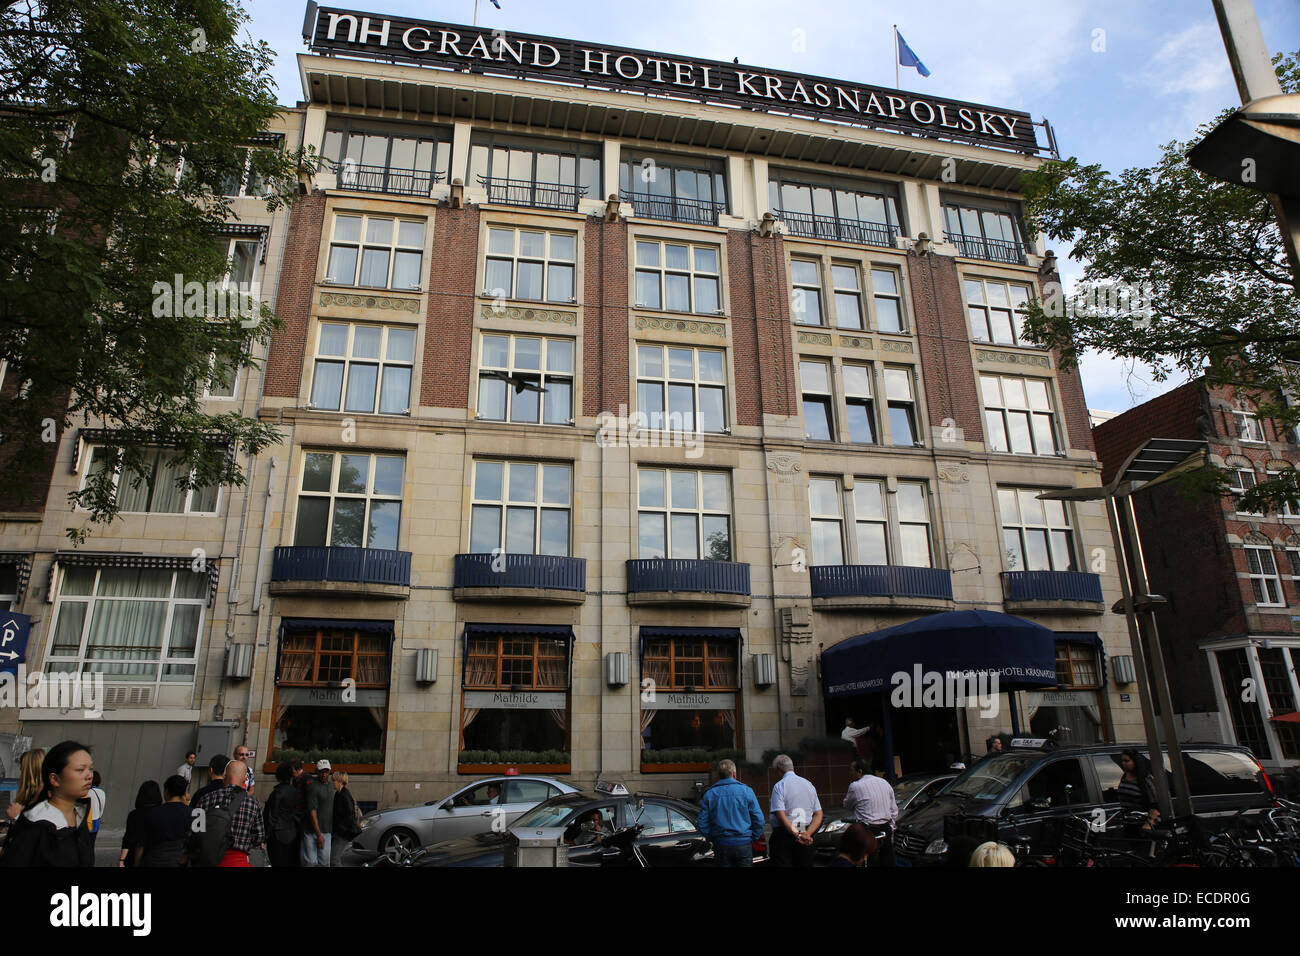 amsterdam dam square nh grand hotel krasnapolsky Stock Photo